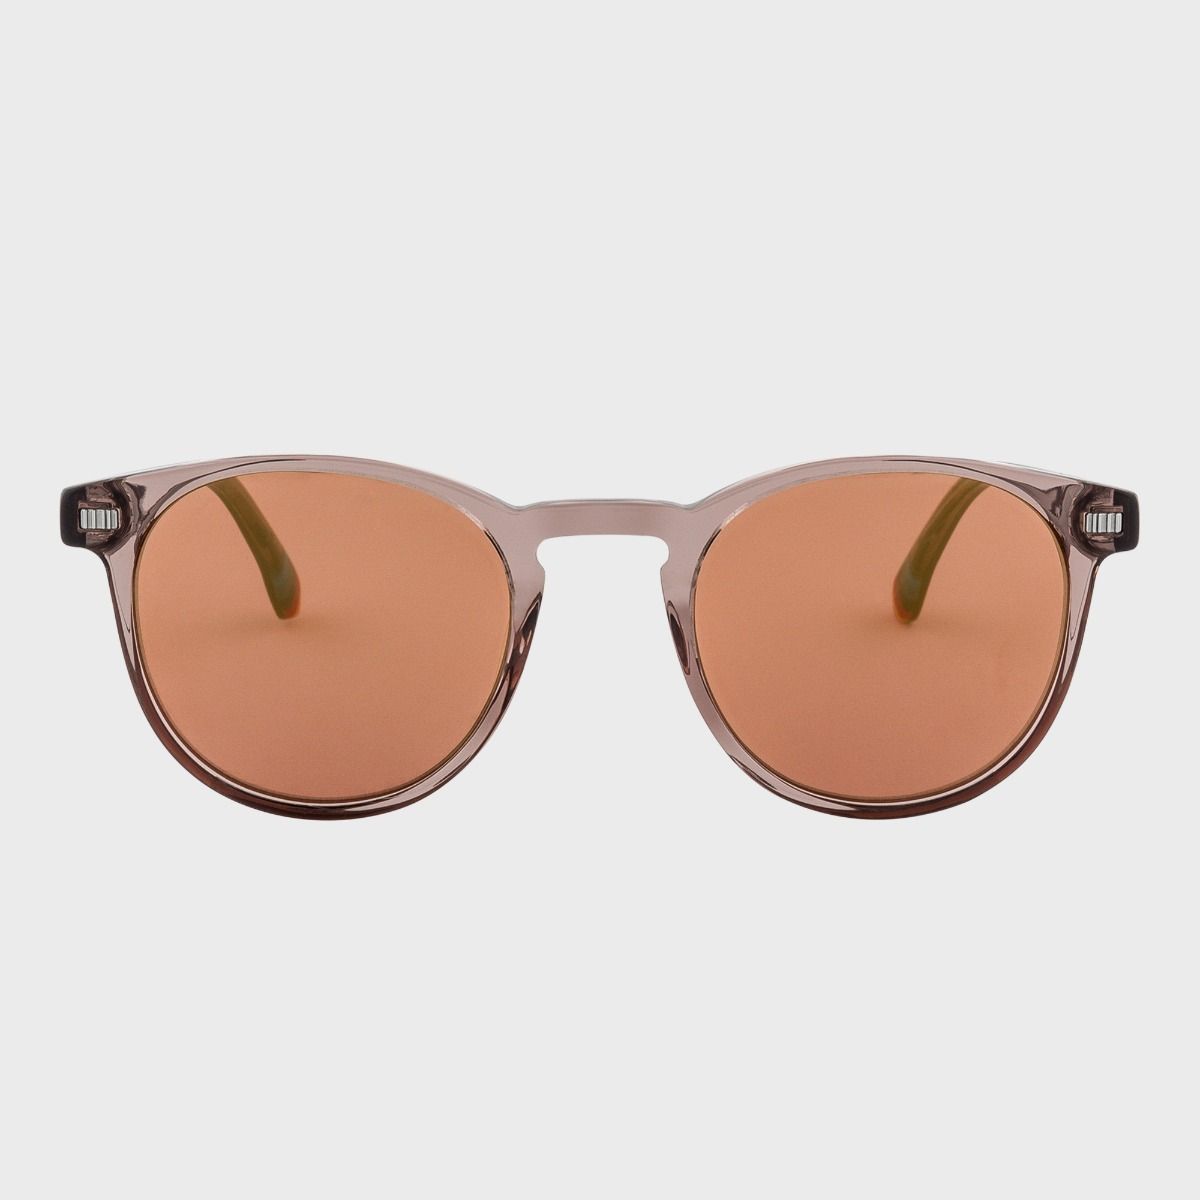 Paul Smith Darwin Round Sunglasses